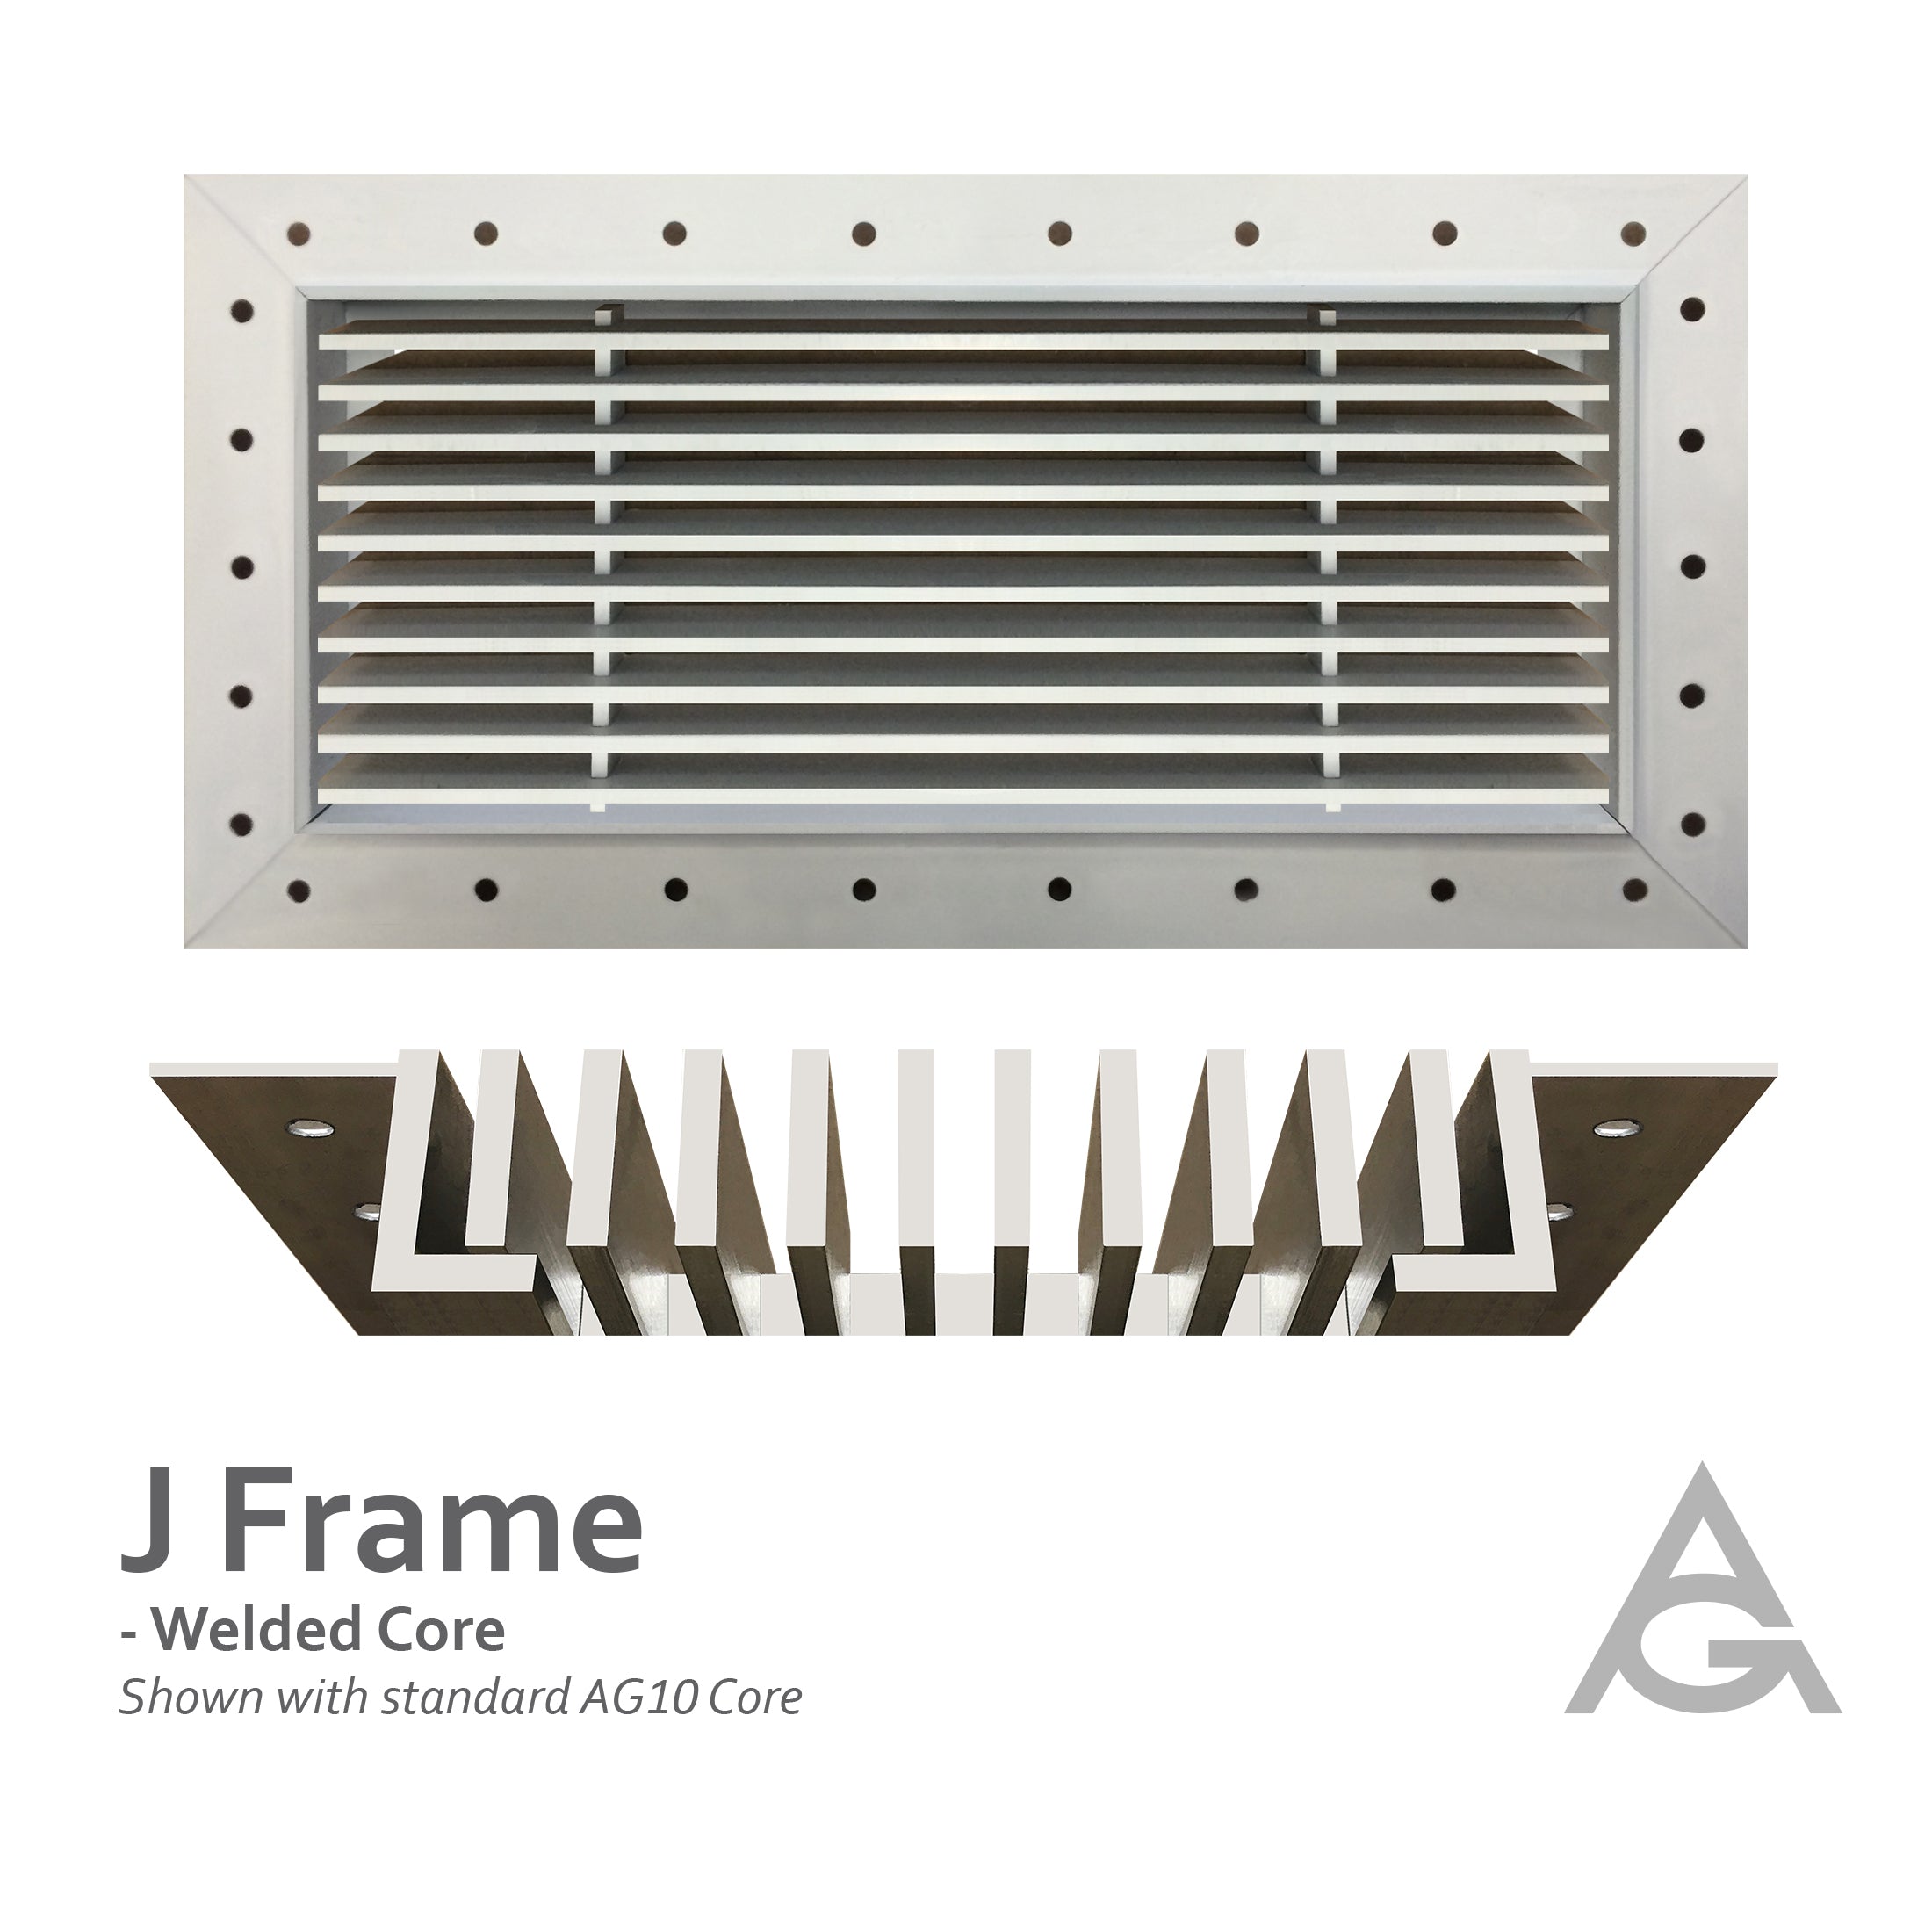 J Frame: Welded Core